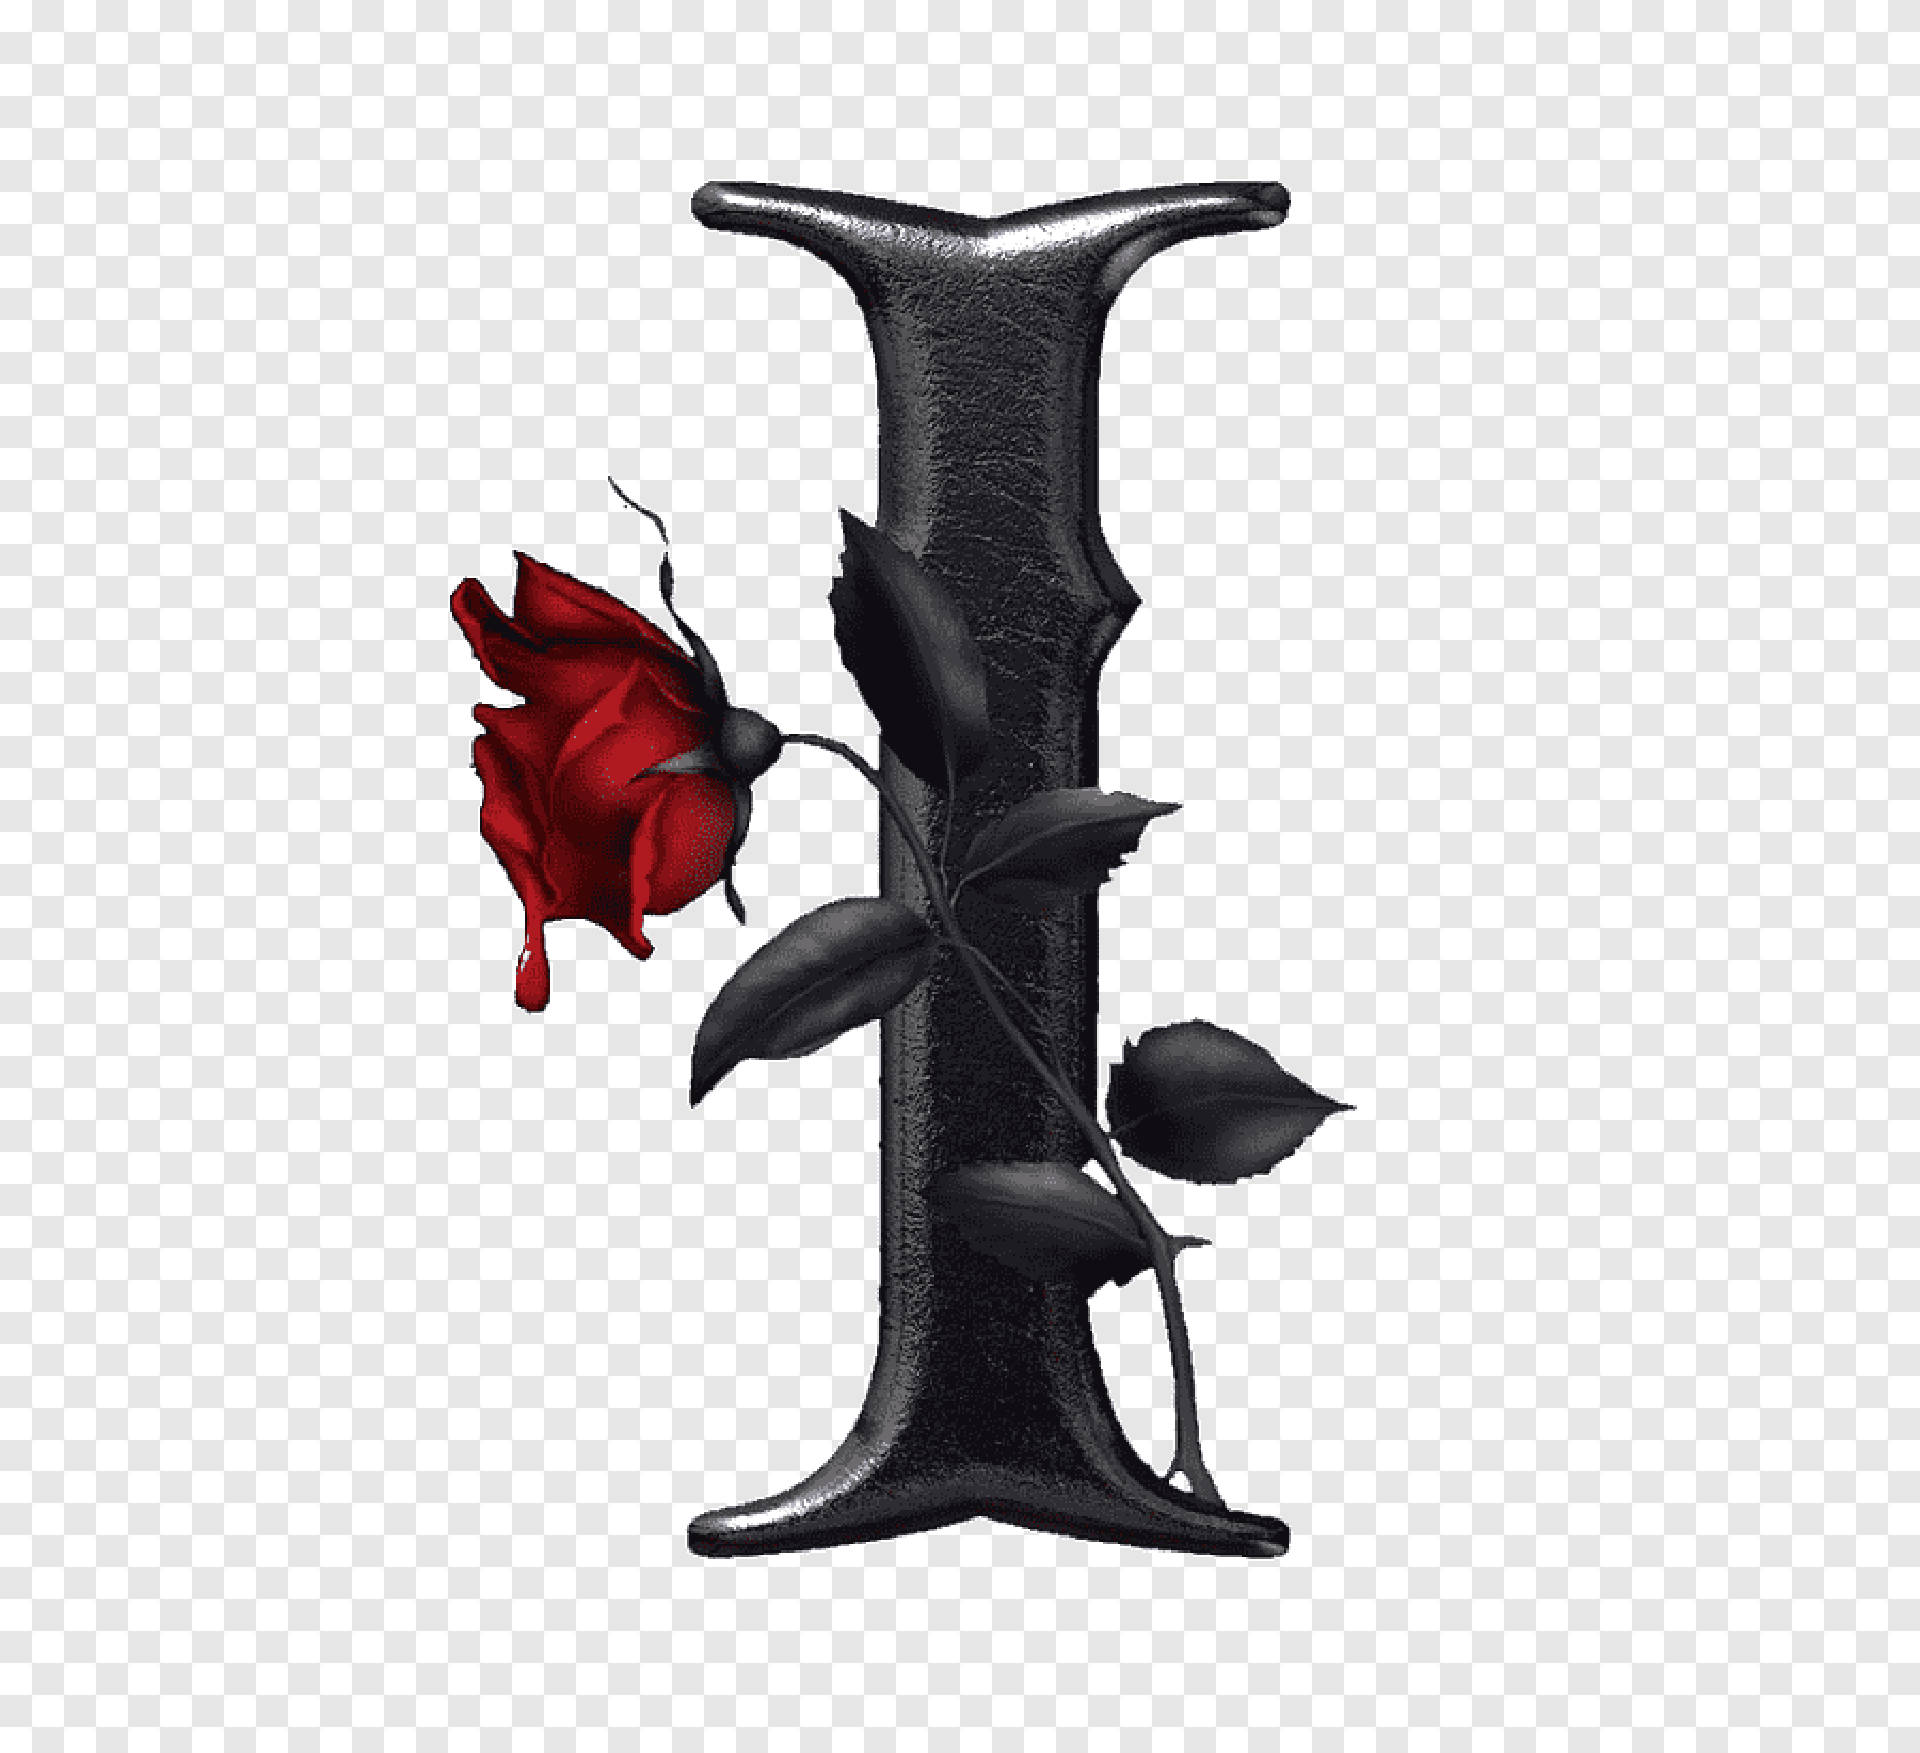 Black Letter I With Red Rose